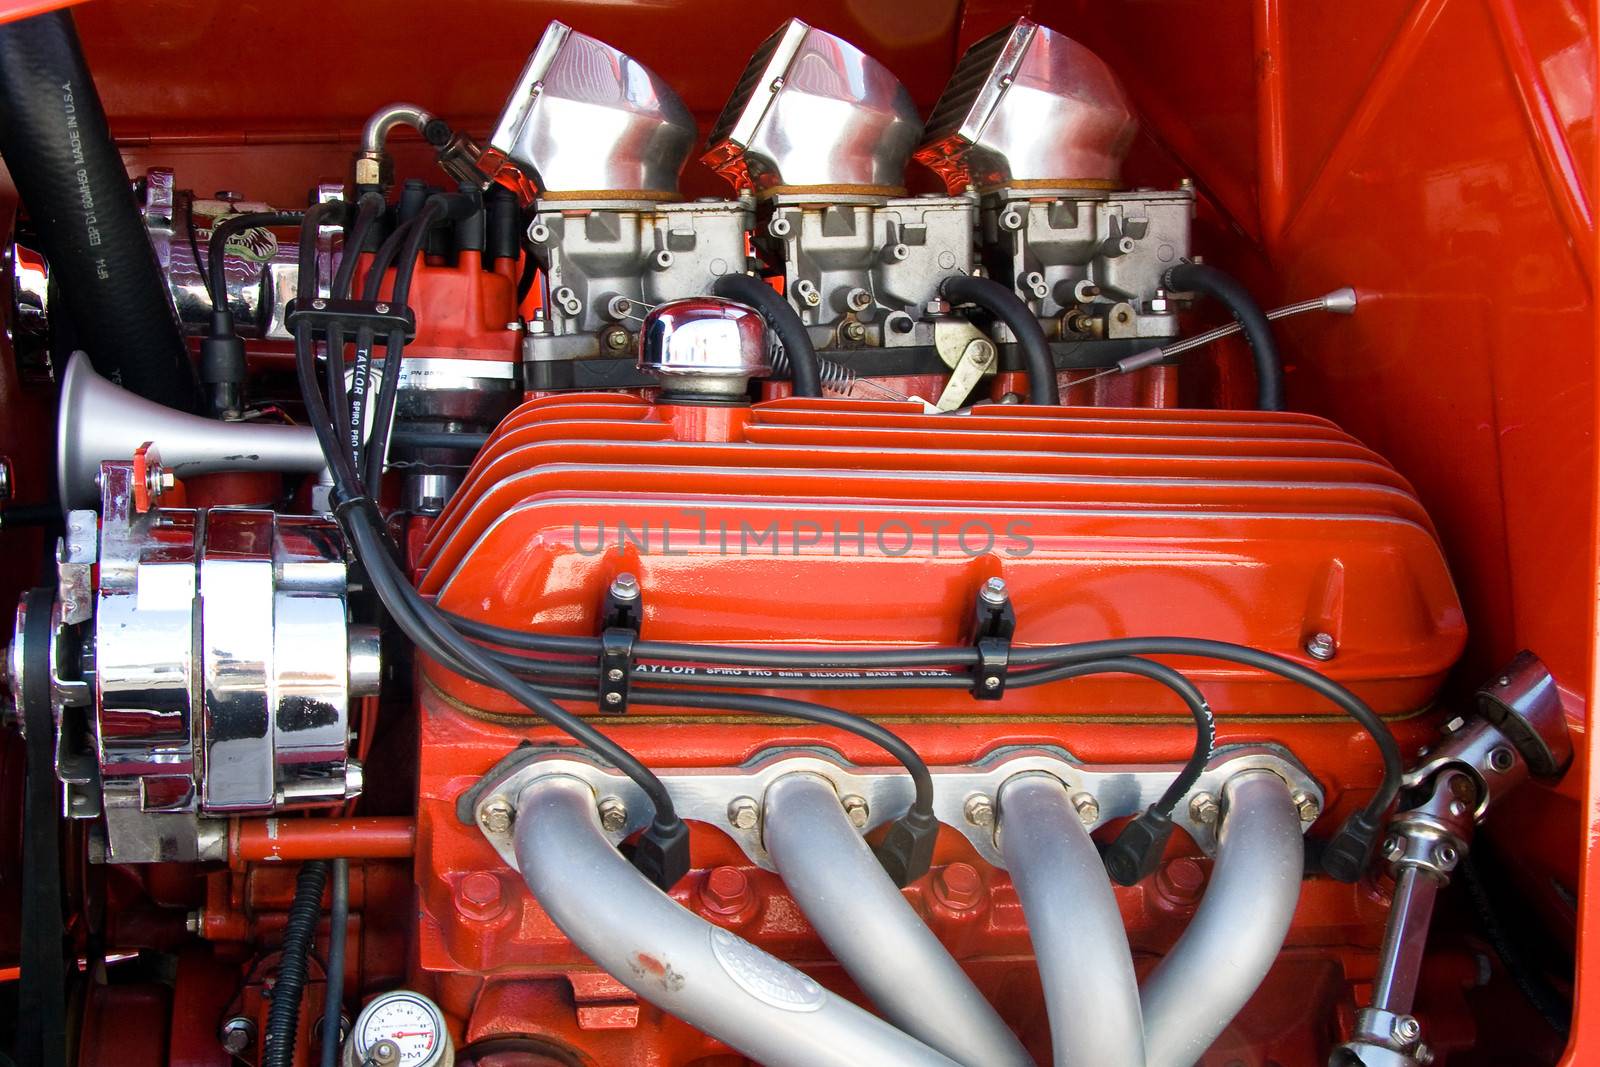 Details of 4 cylinder petrol engine painted red / orange.